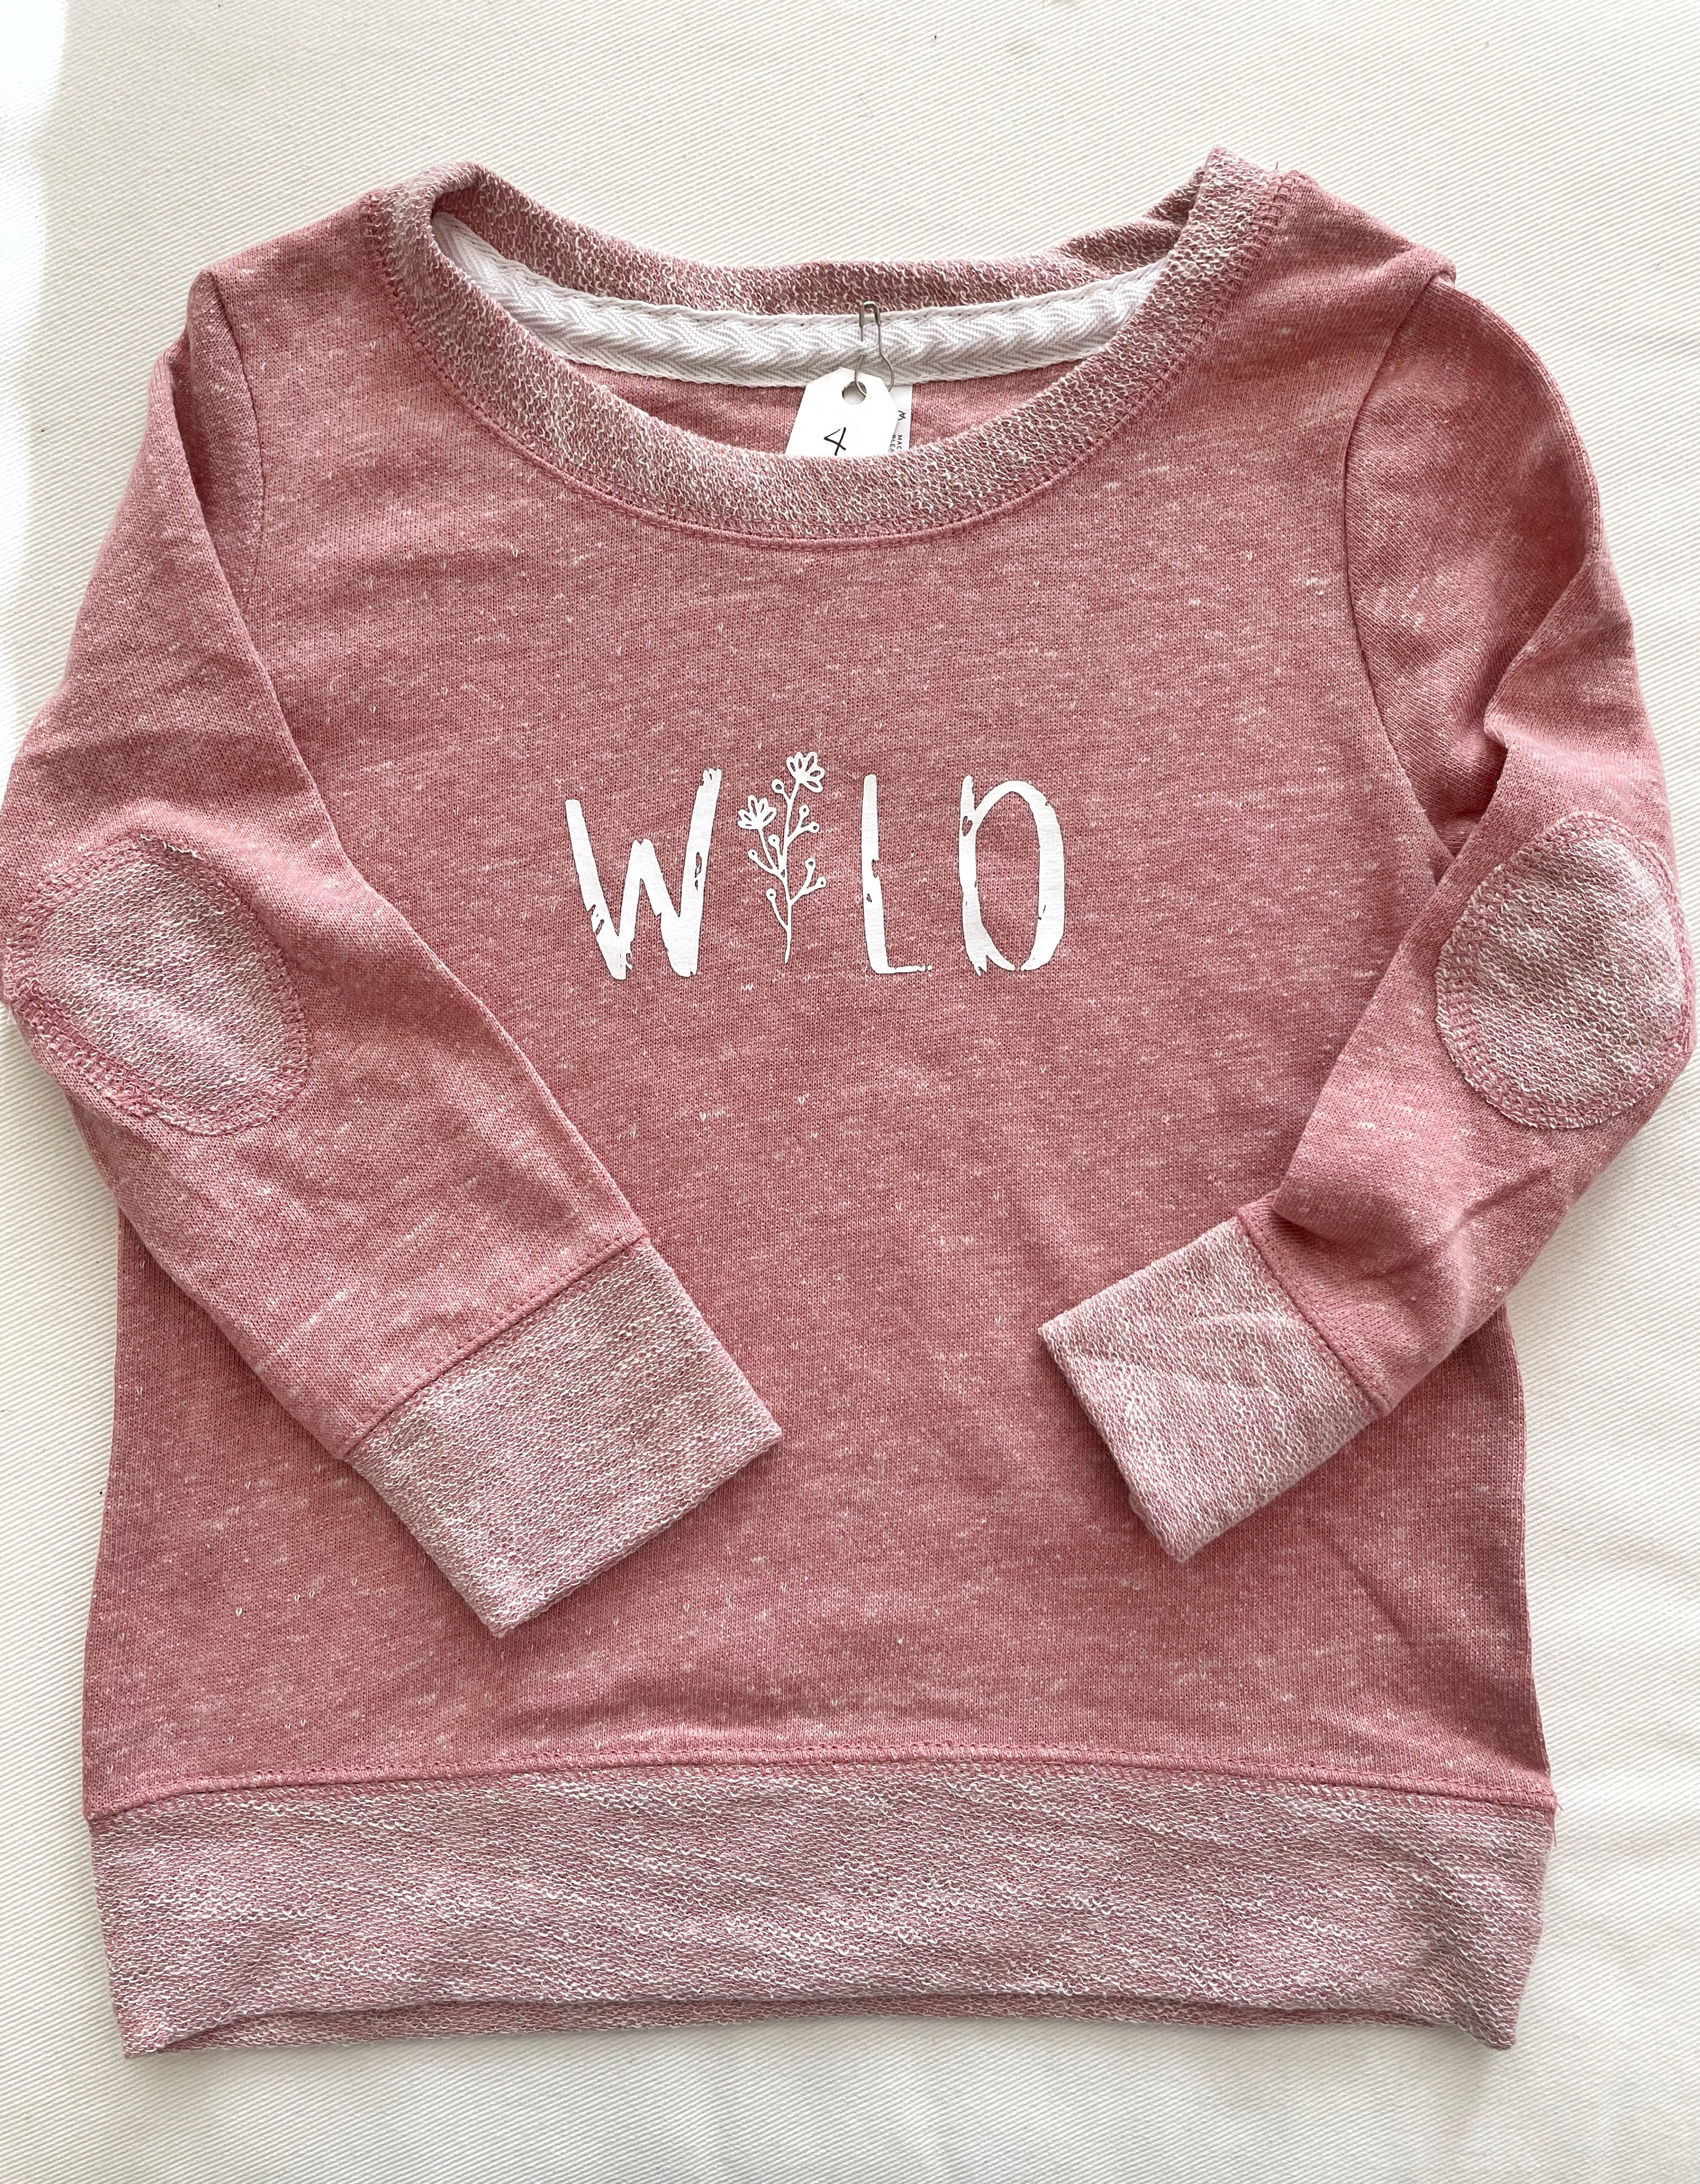 Simply Grey Signature - "Wild" Pink Sweatshirt